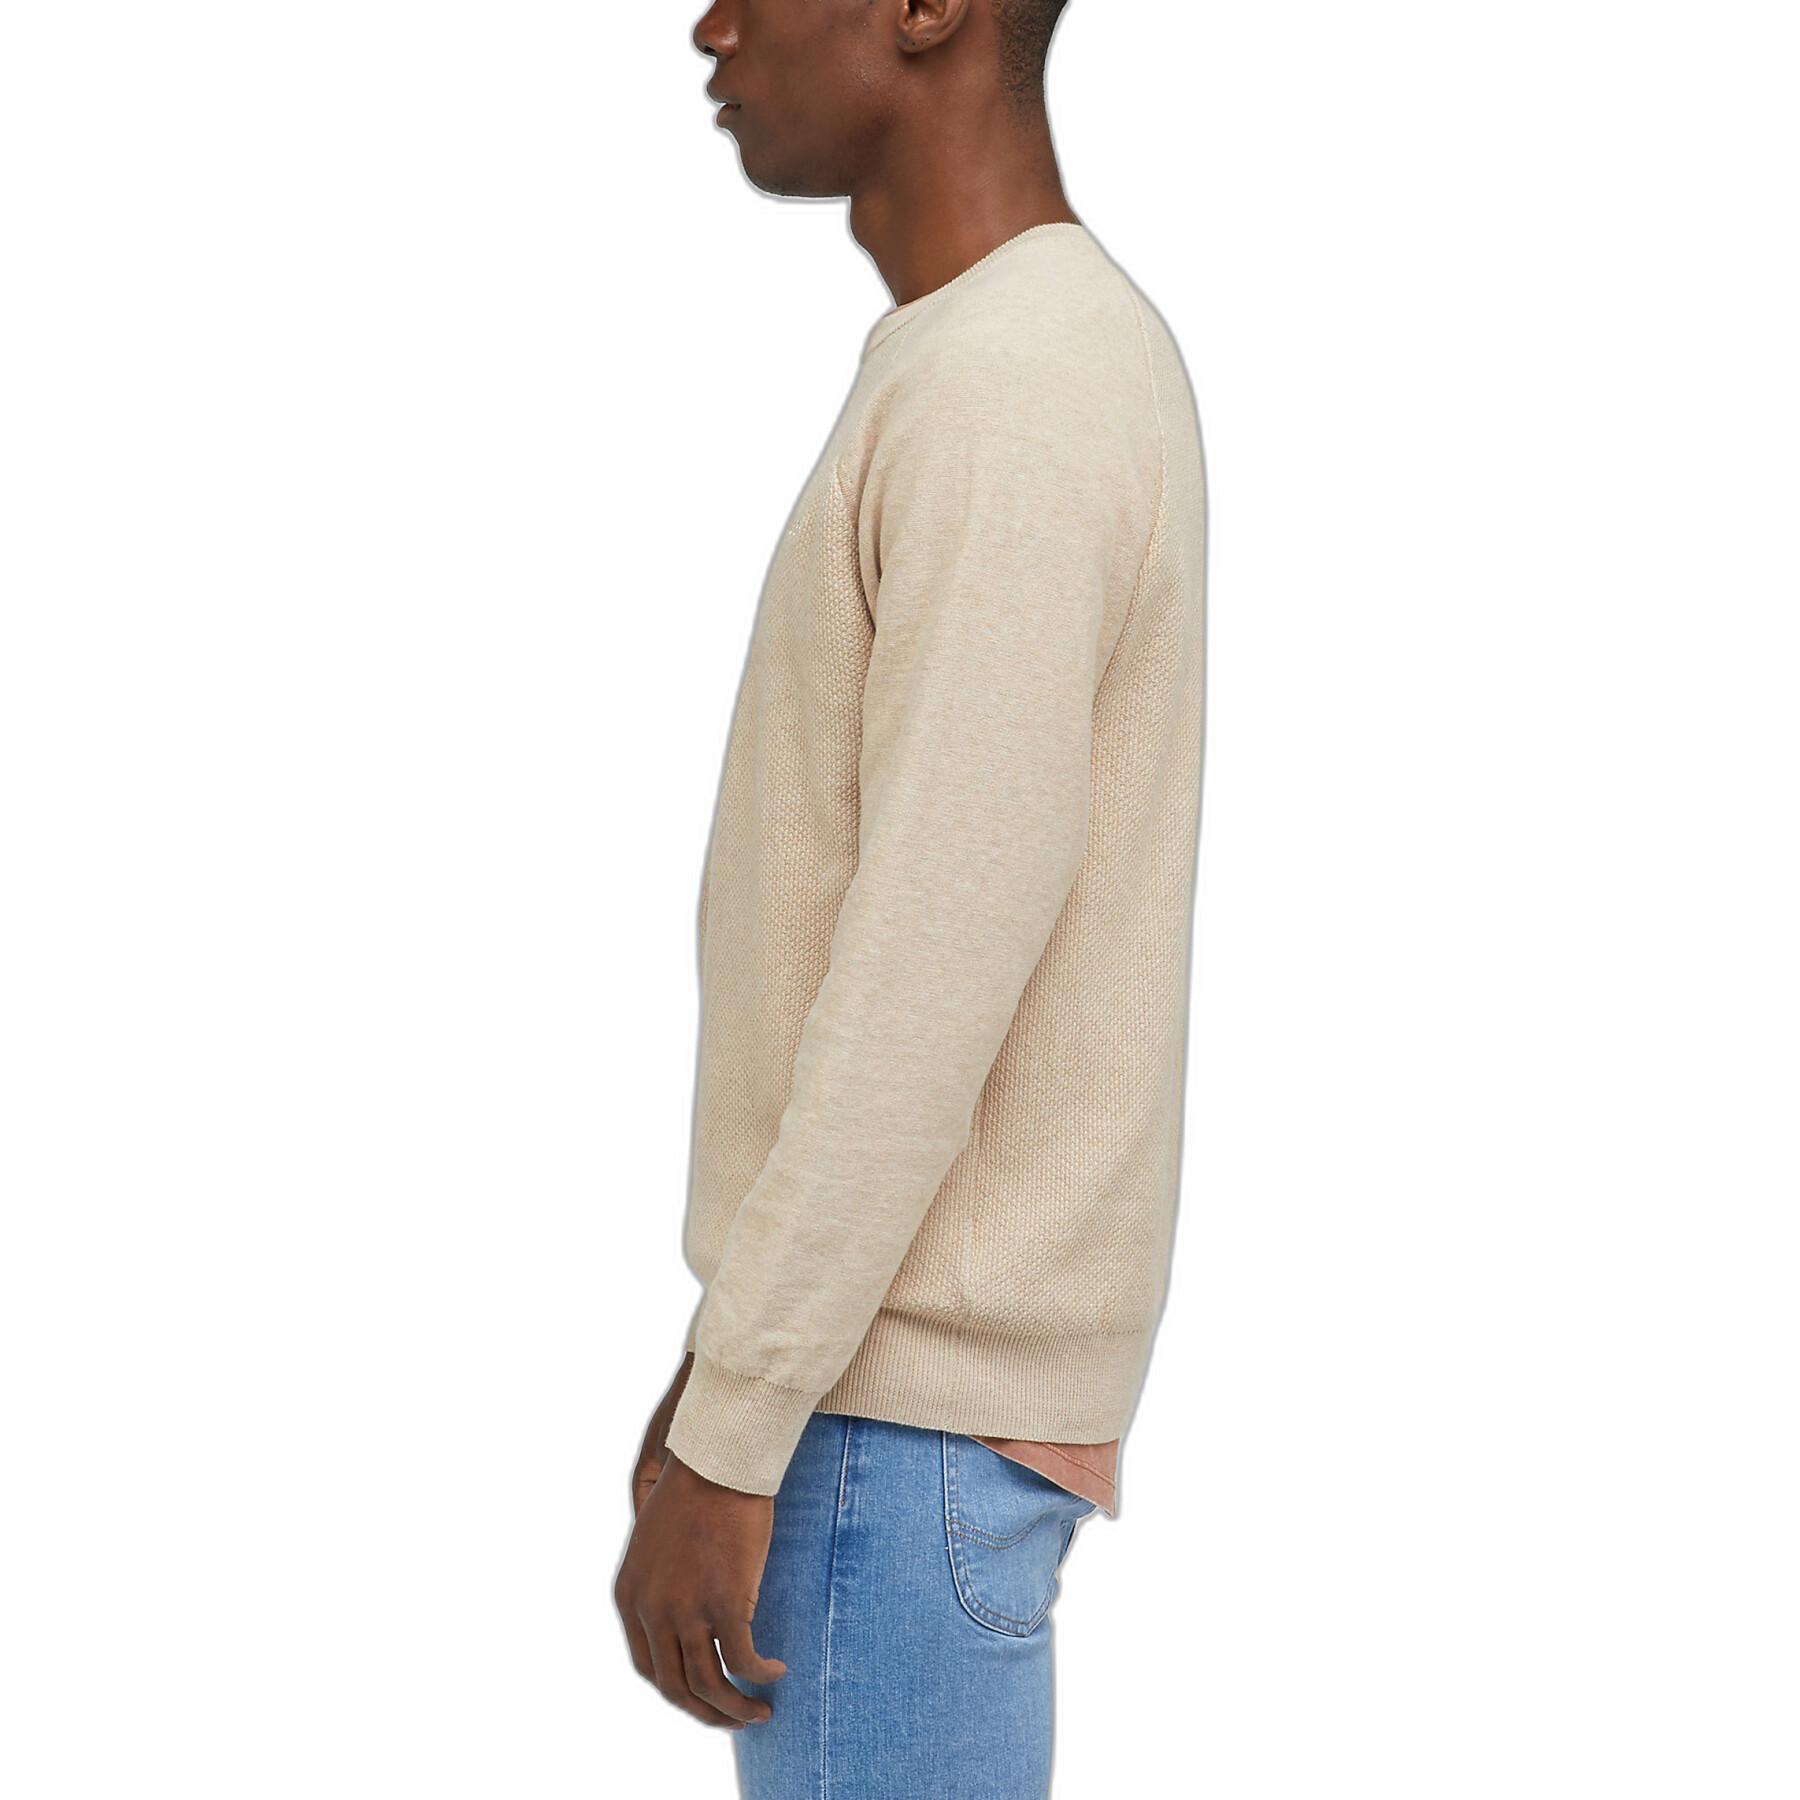 Raglan sweater with round neck Lee